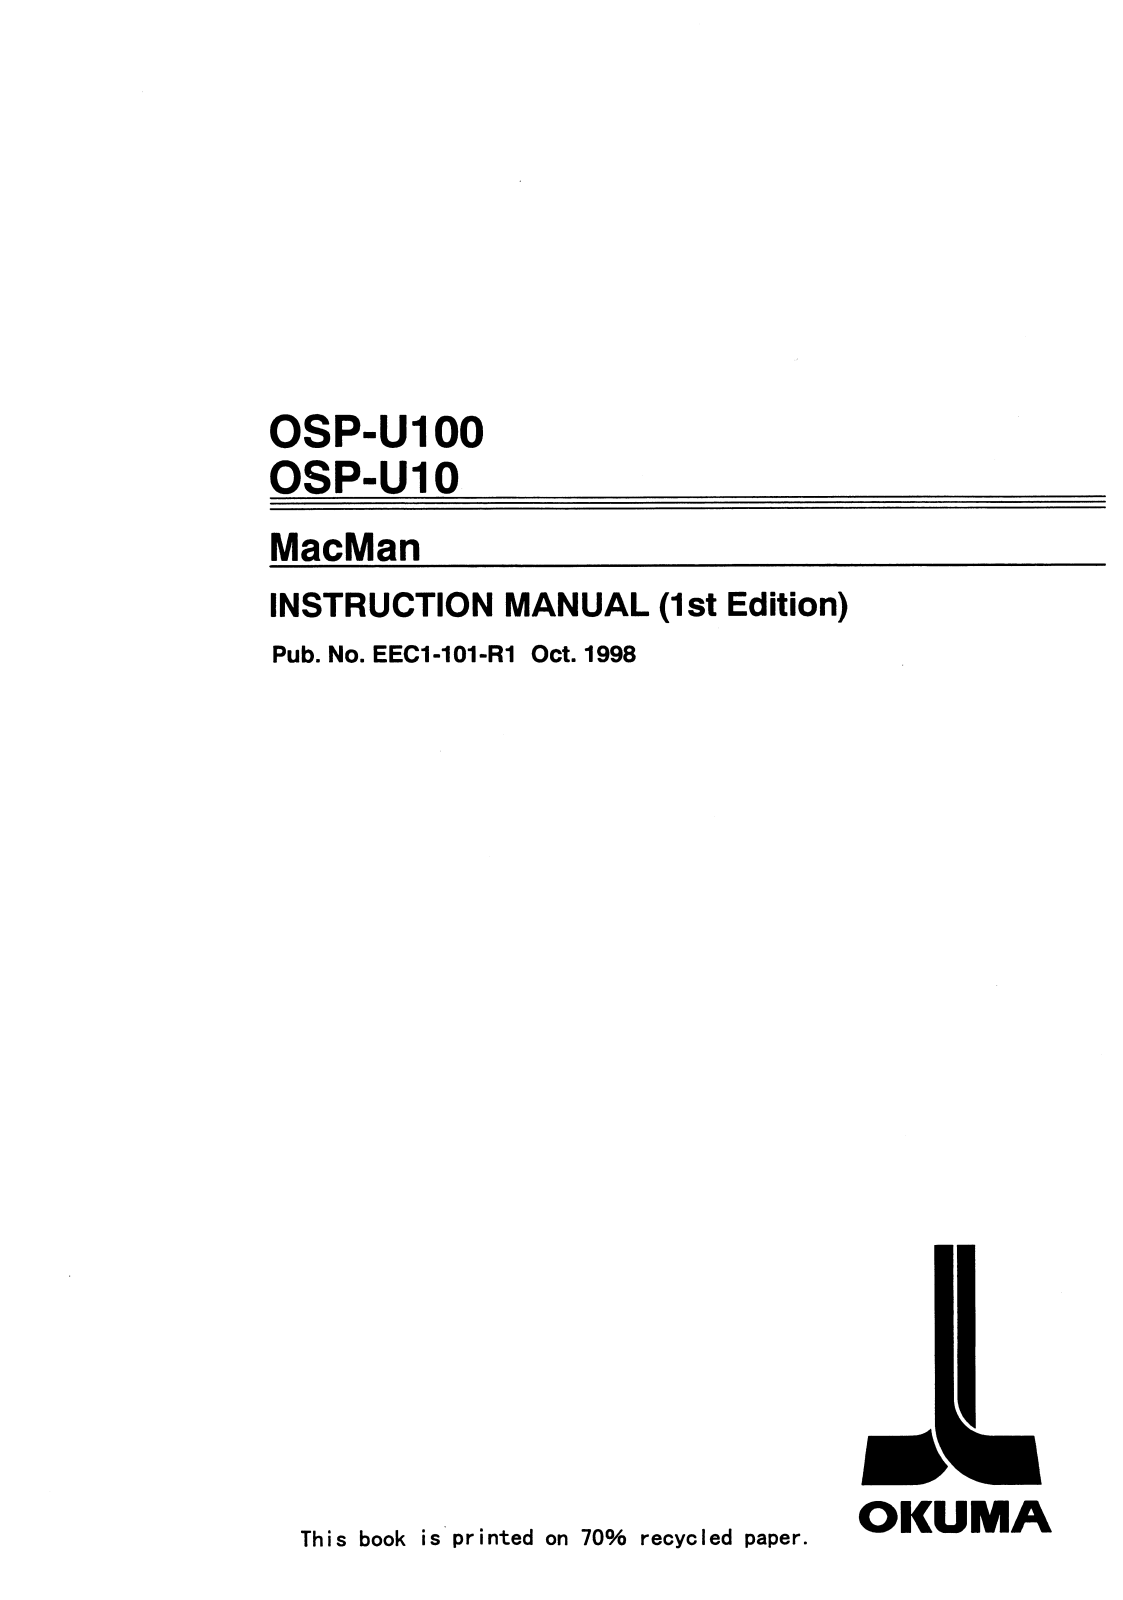 okuma OSP-U100, OSP-U10 Instruction Manual